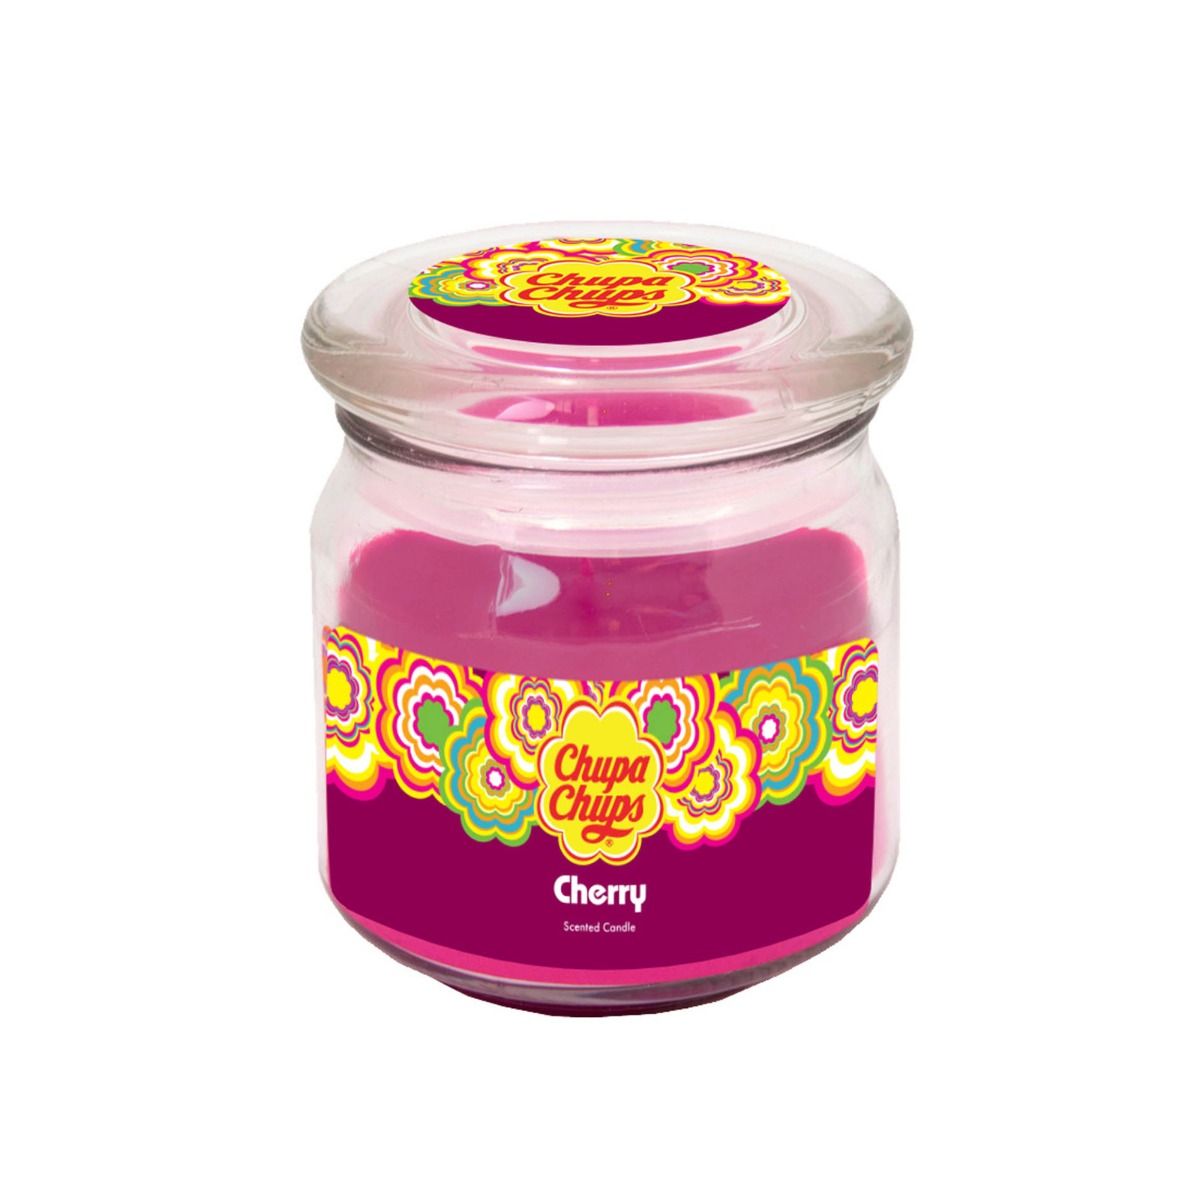 Chupa Chups 8oz Medium Jar Candle - Cherry